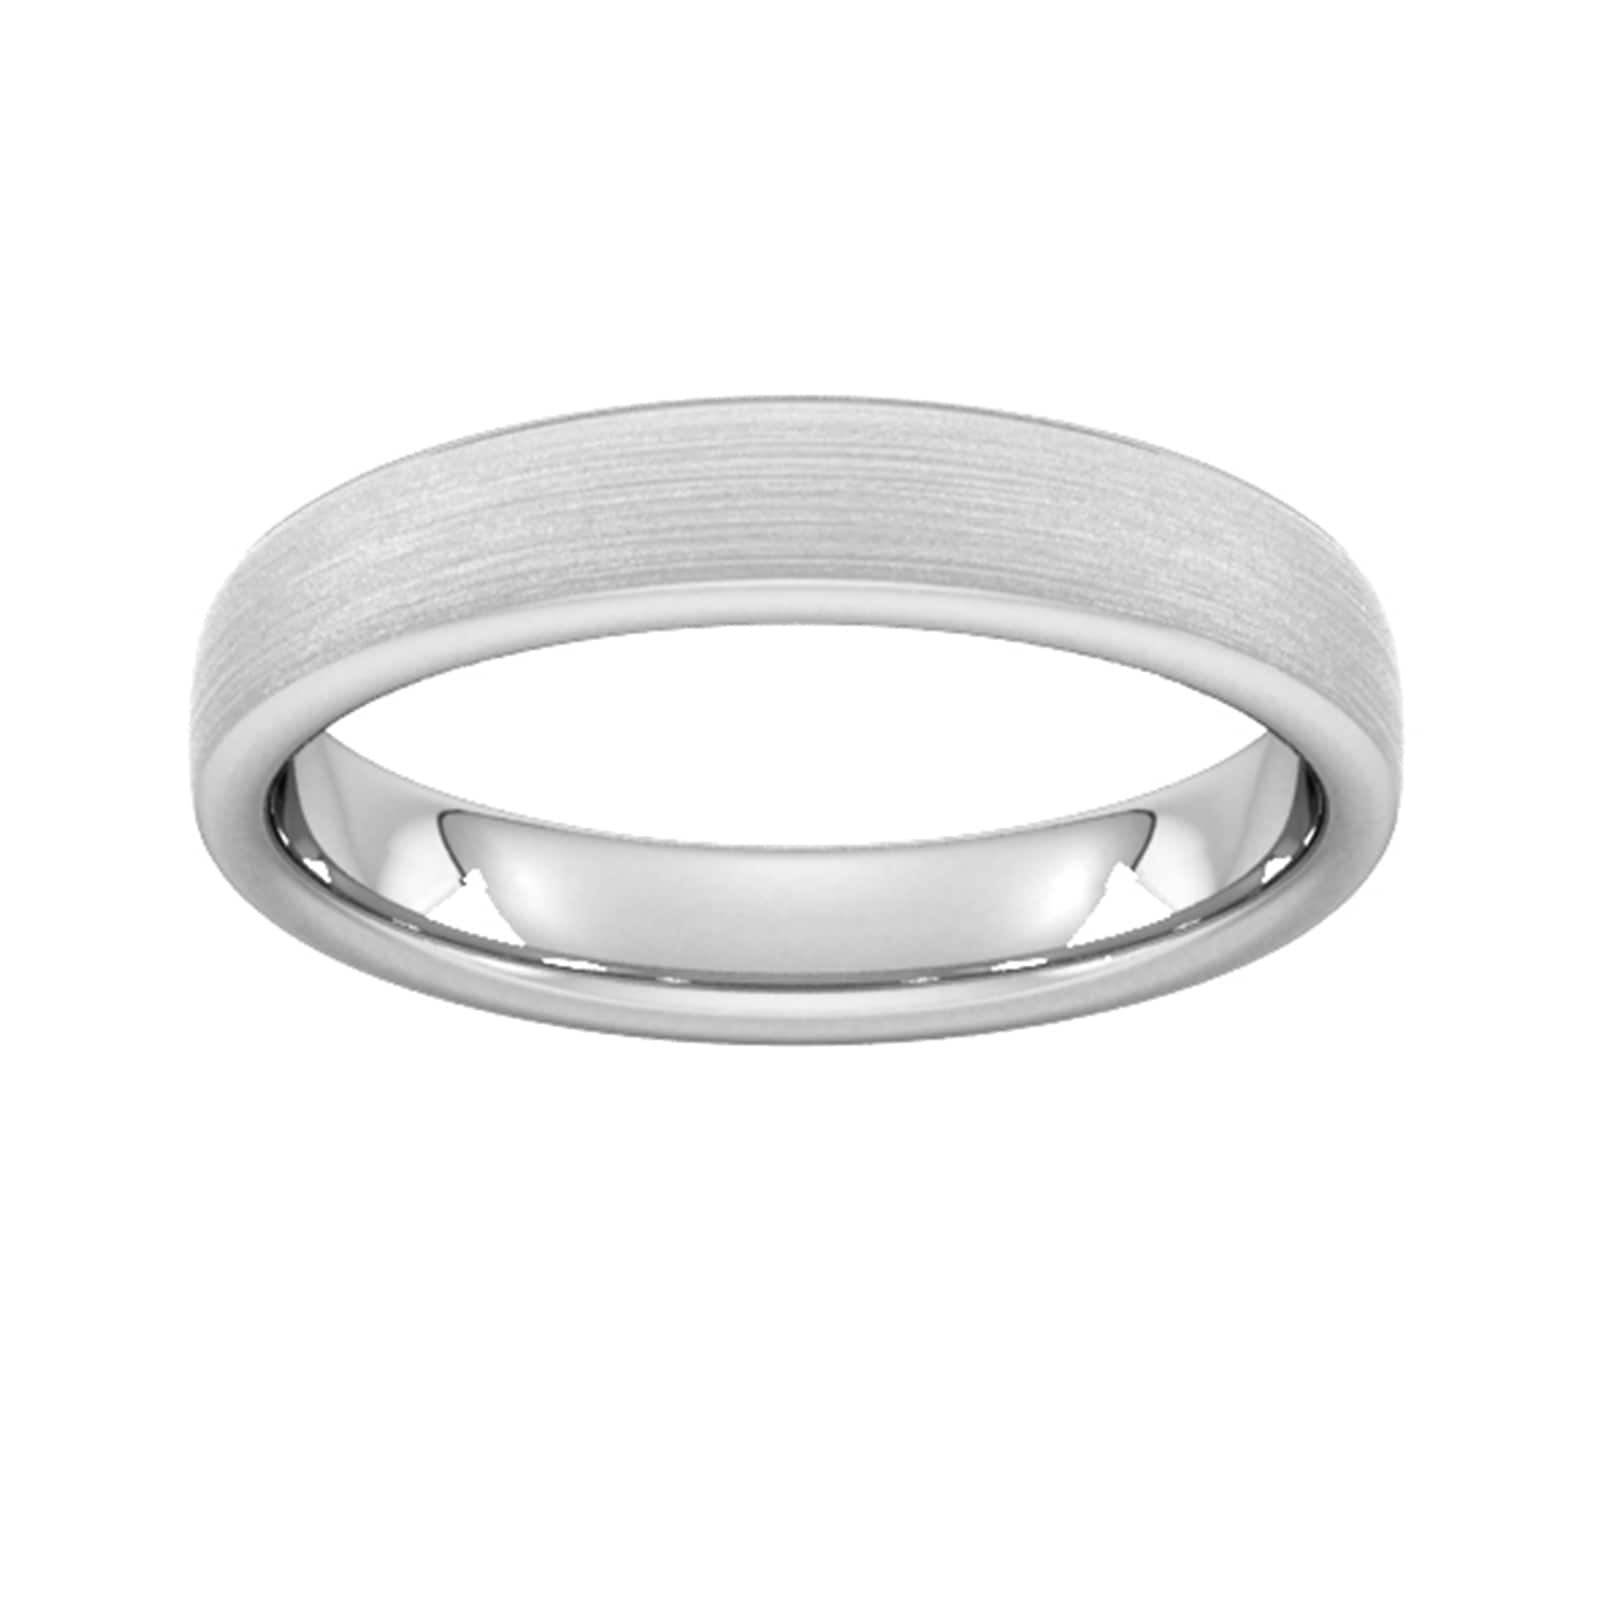 4mm Slight Court Standard Matt Finished Wedding Ring In 950 Palladium - Ring Size J